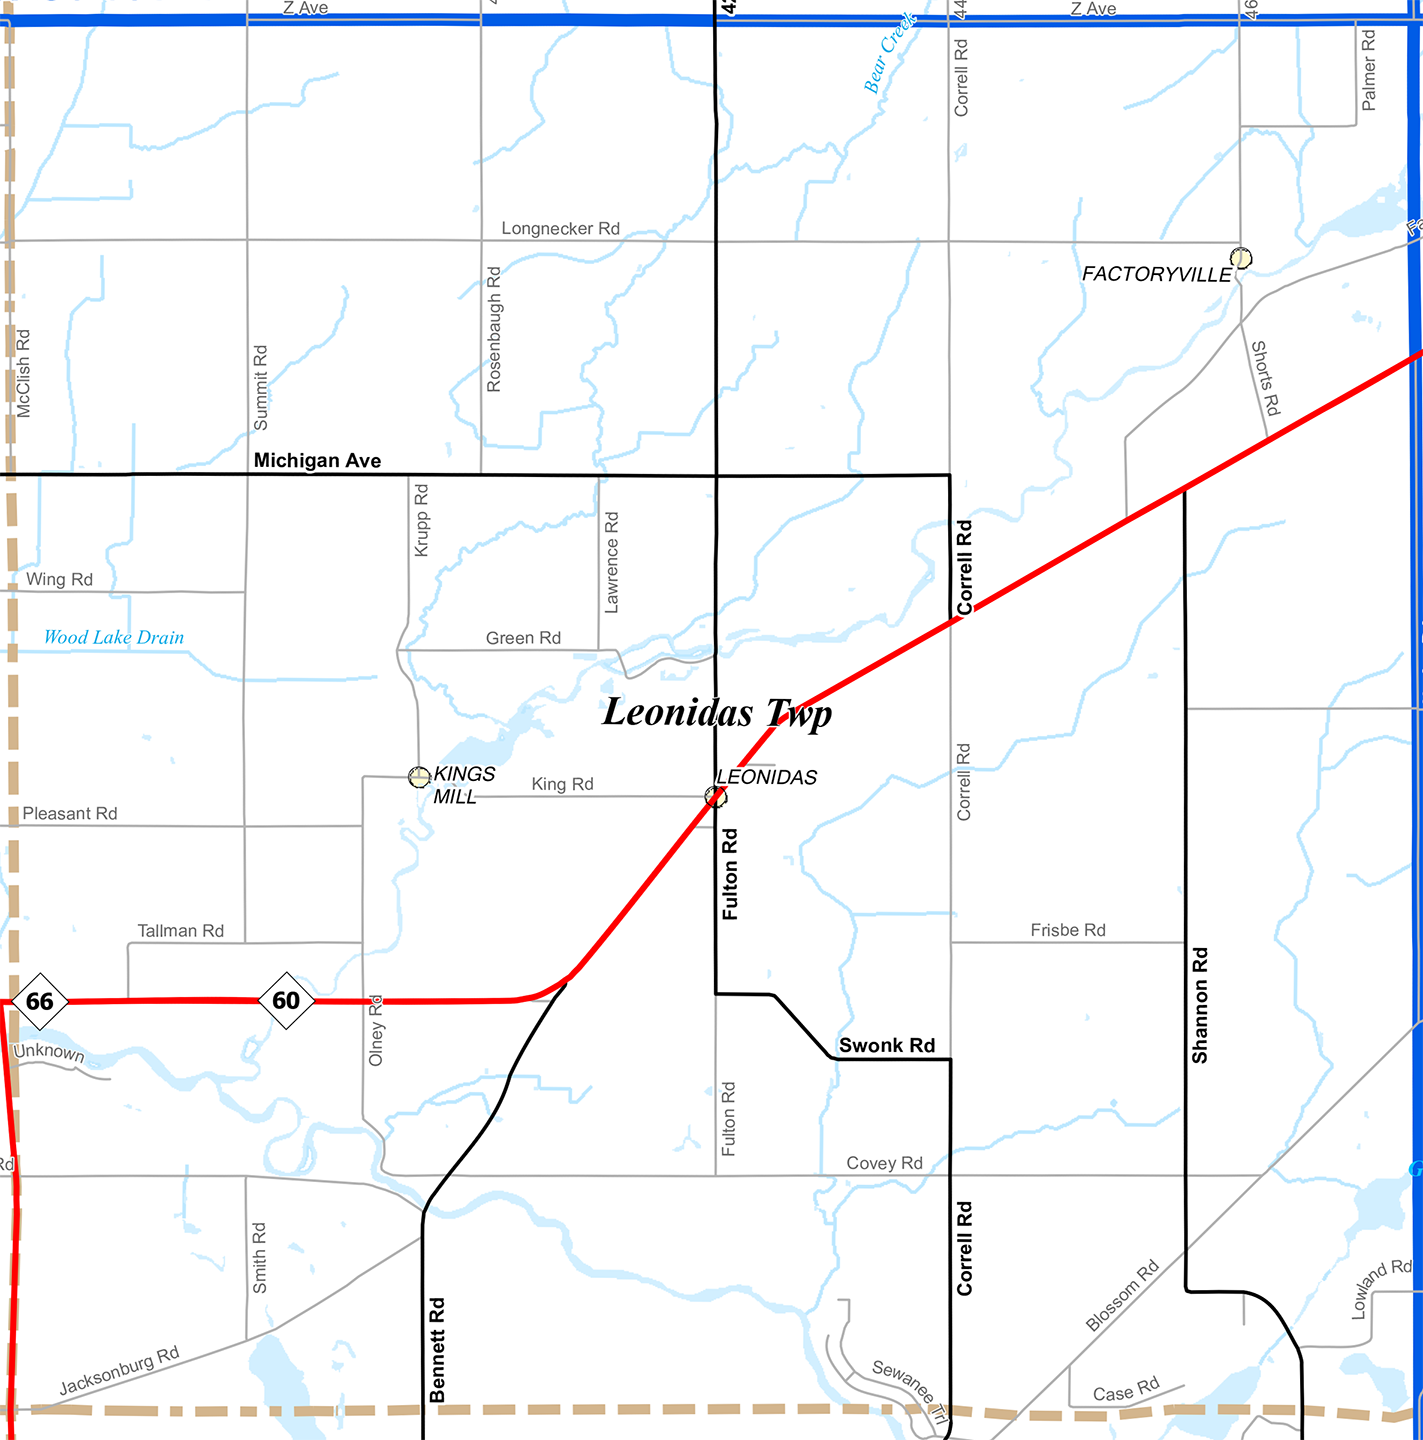 2009 Leonidas Township Michigan map